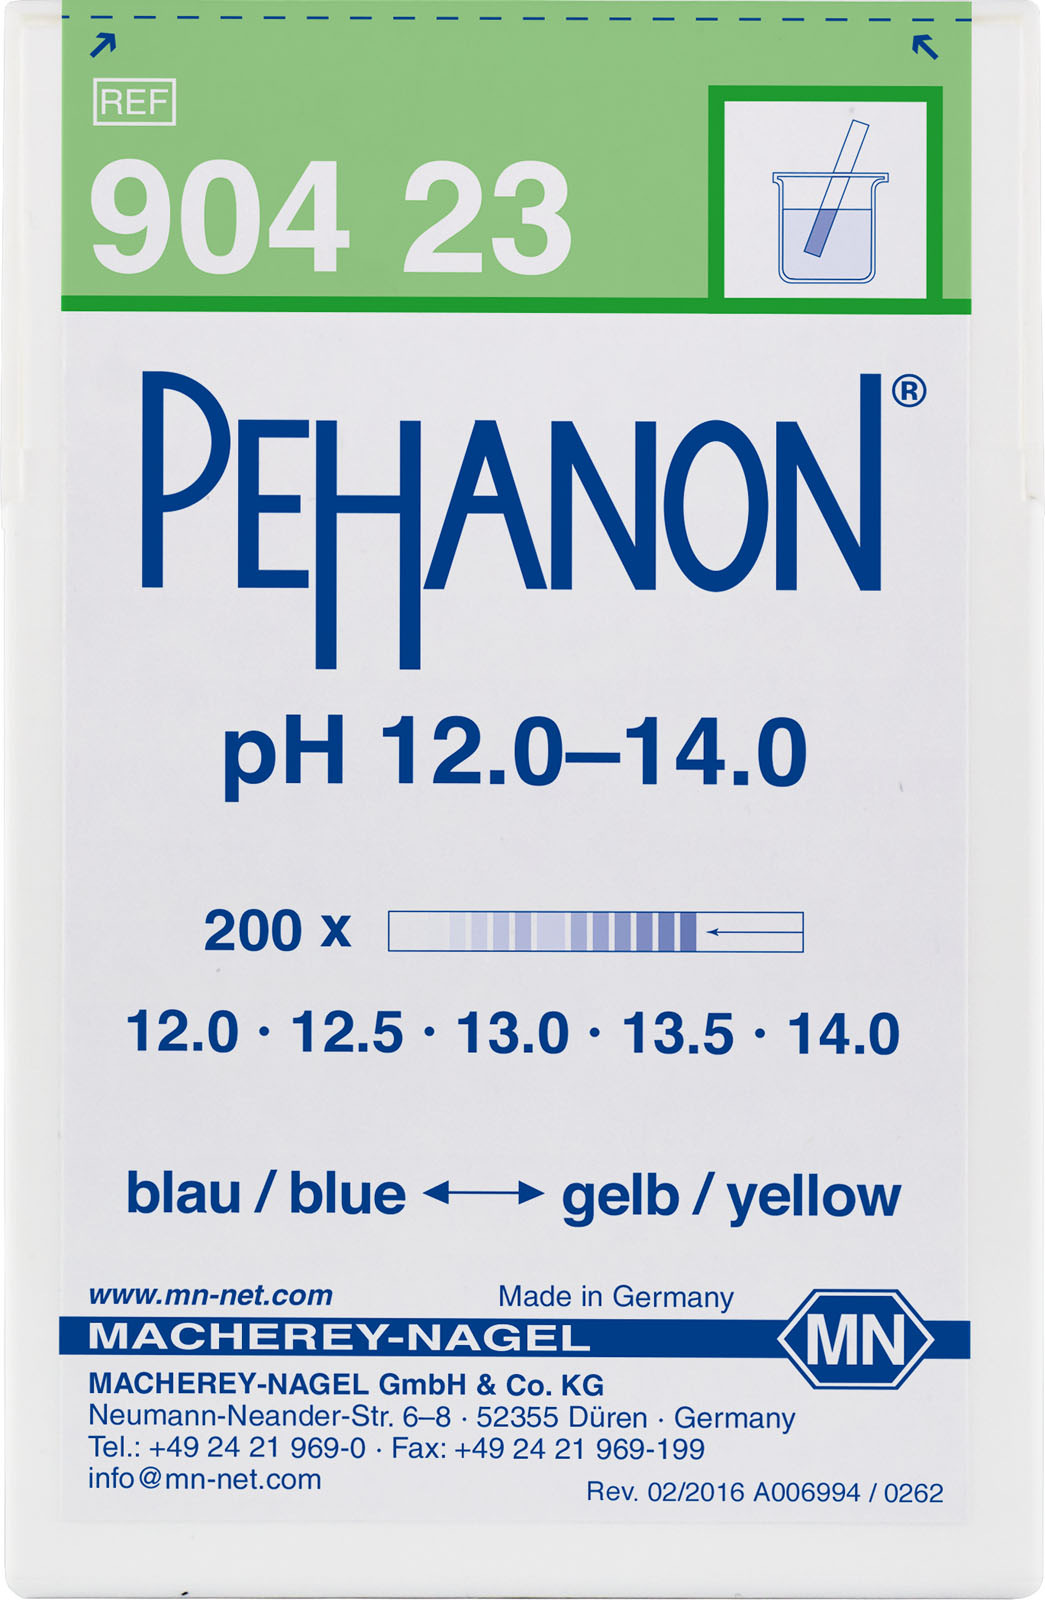 pH test strips, PEHANON 12.0 to 14.0 (Box of 200 test strips)